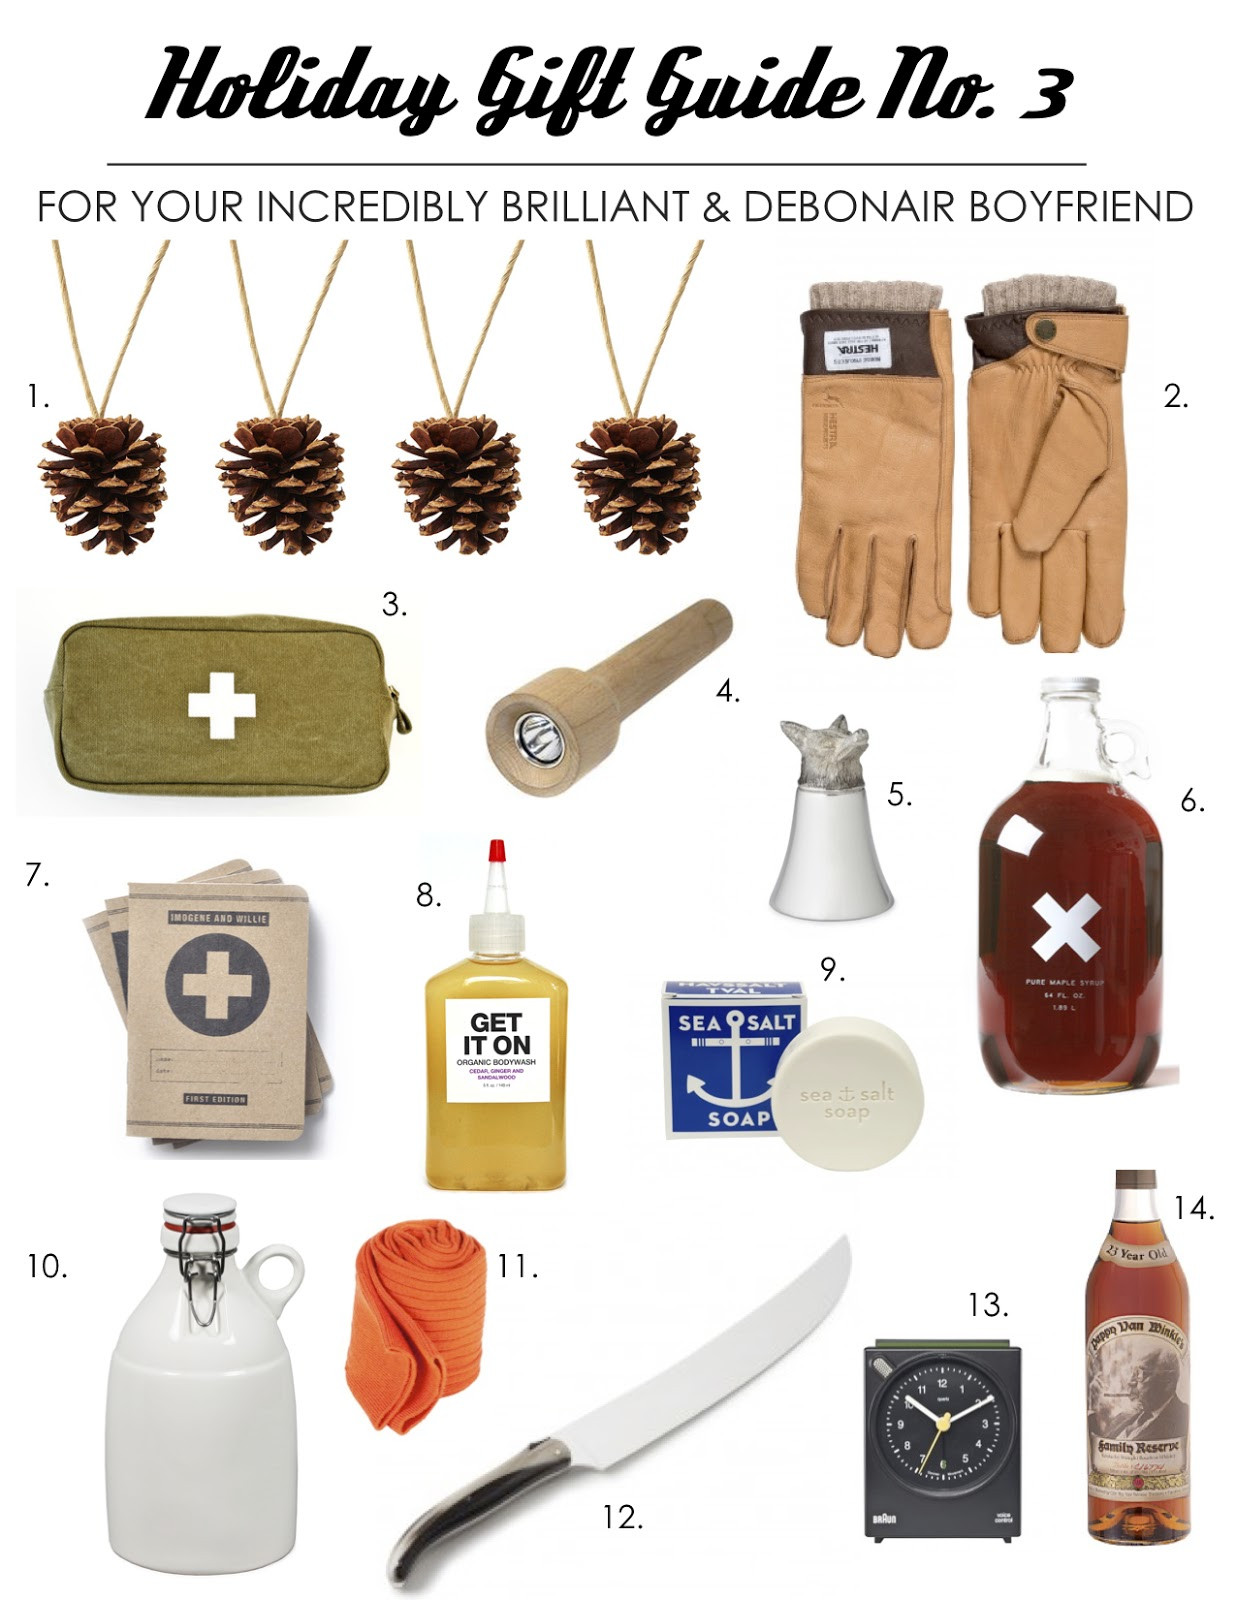 Best Boyfriend Gift Ideas
 Gift Guide 2012 The Best Gifts for Your Boyfriend Hey